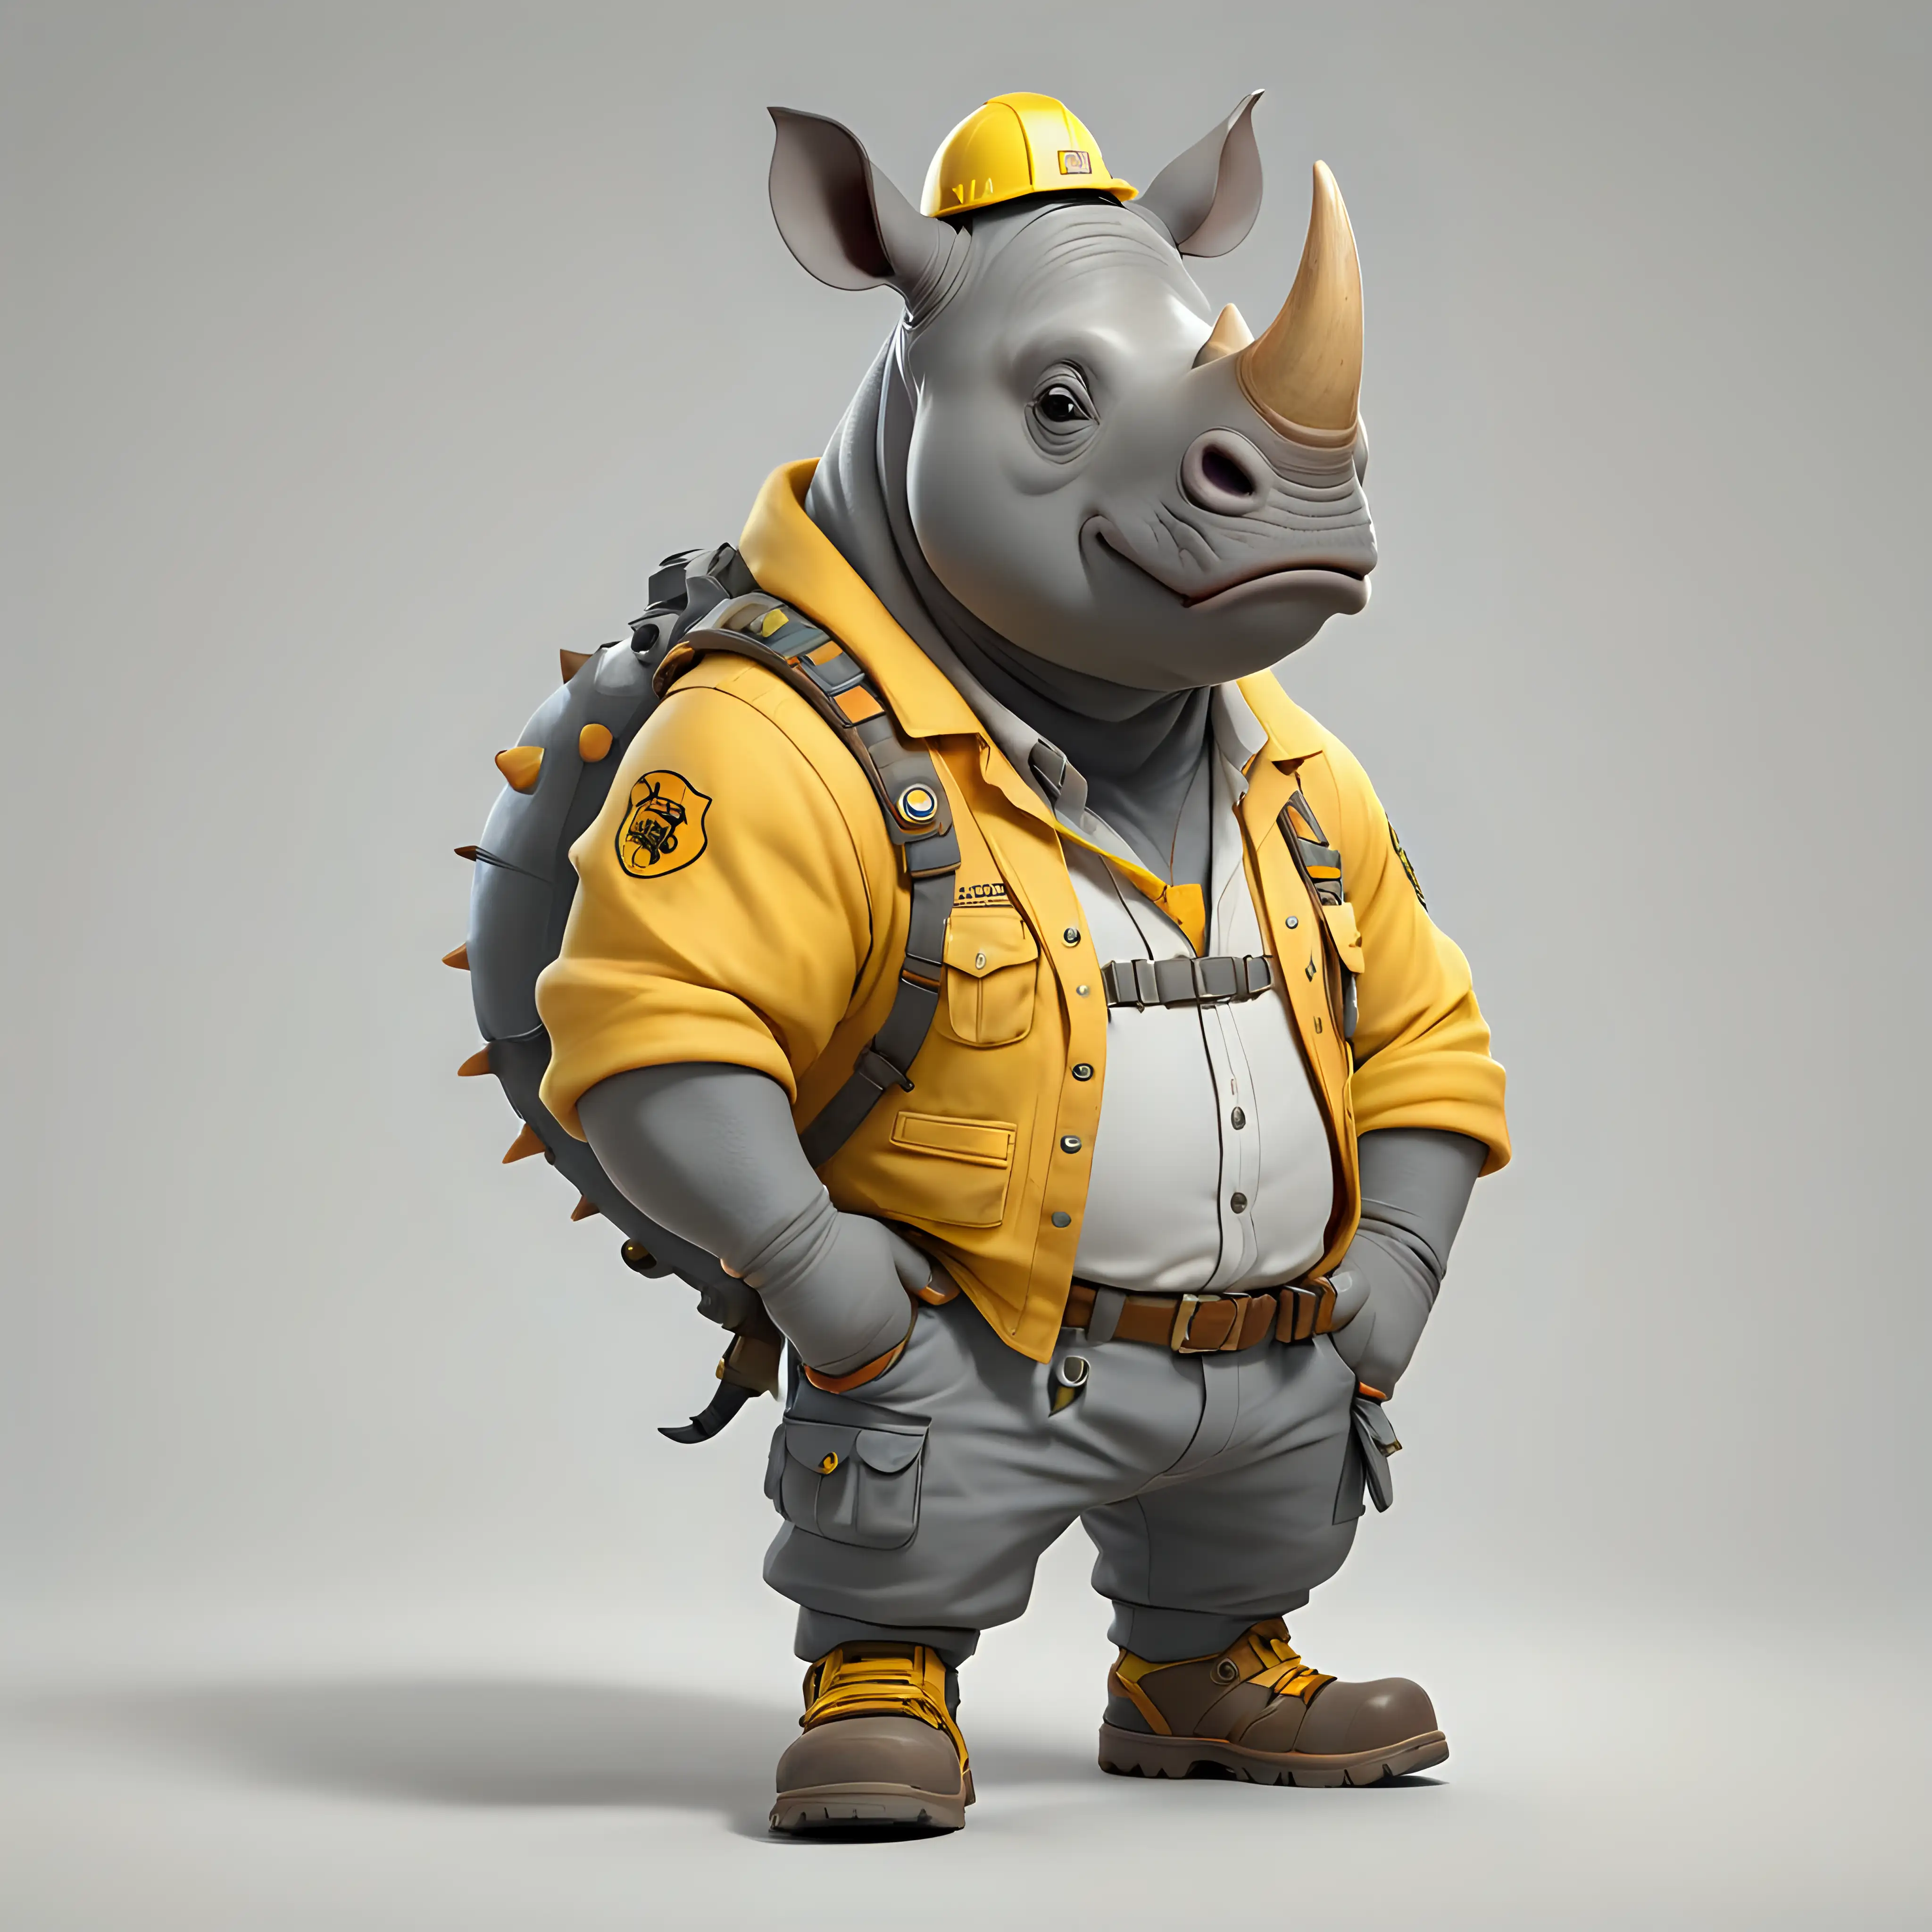 Cartoon Rhinoceros Engineer Wearing Yellow Helmet in Work Clothes